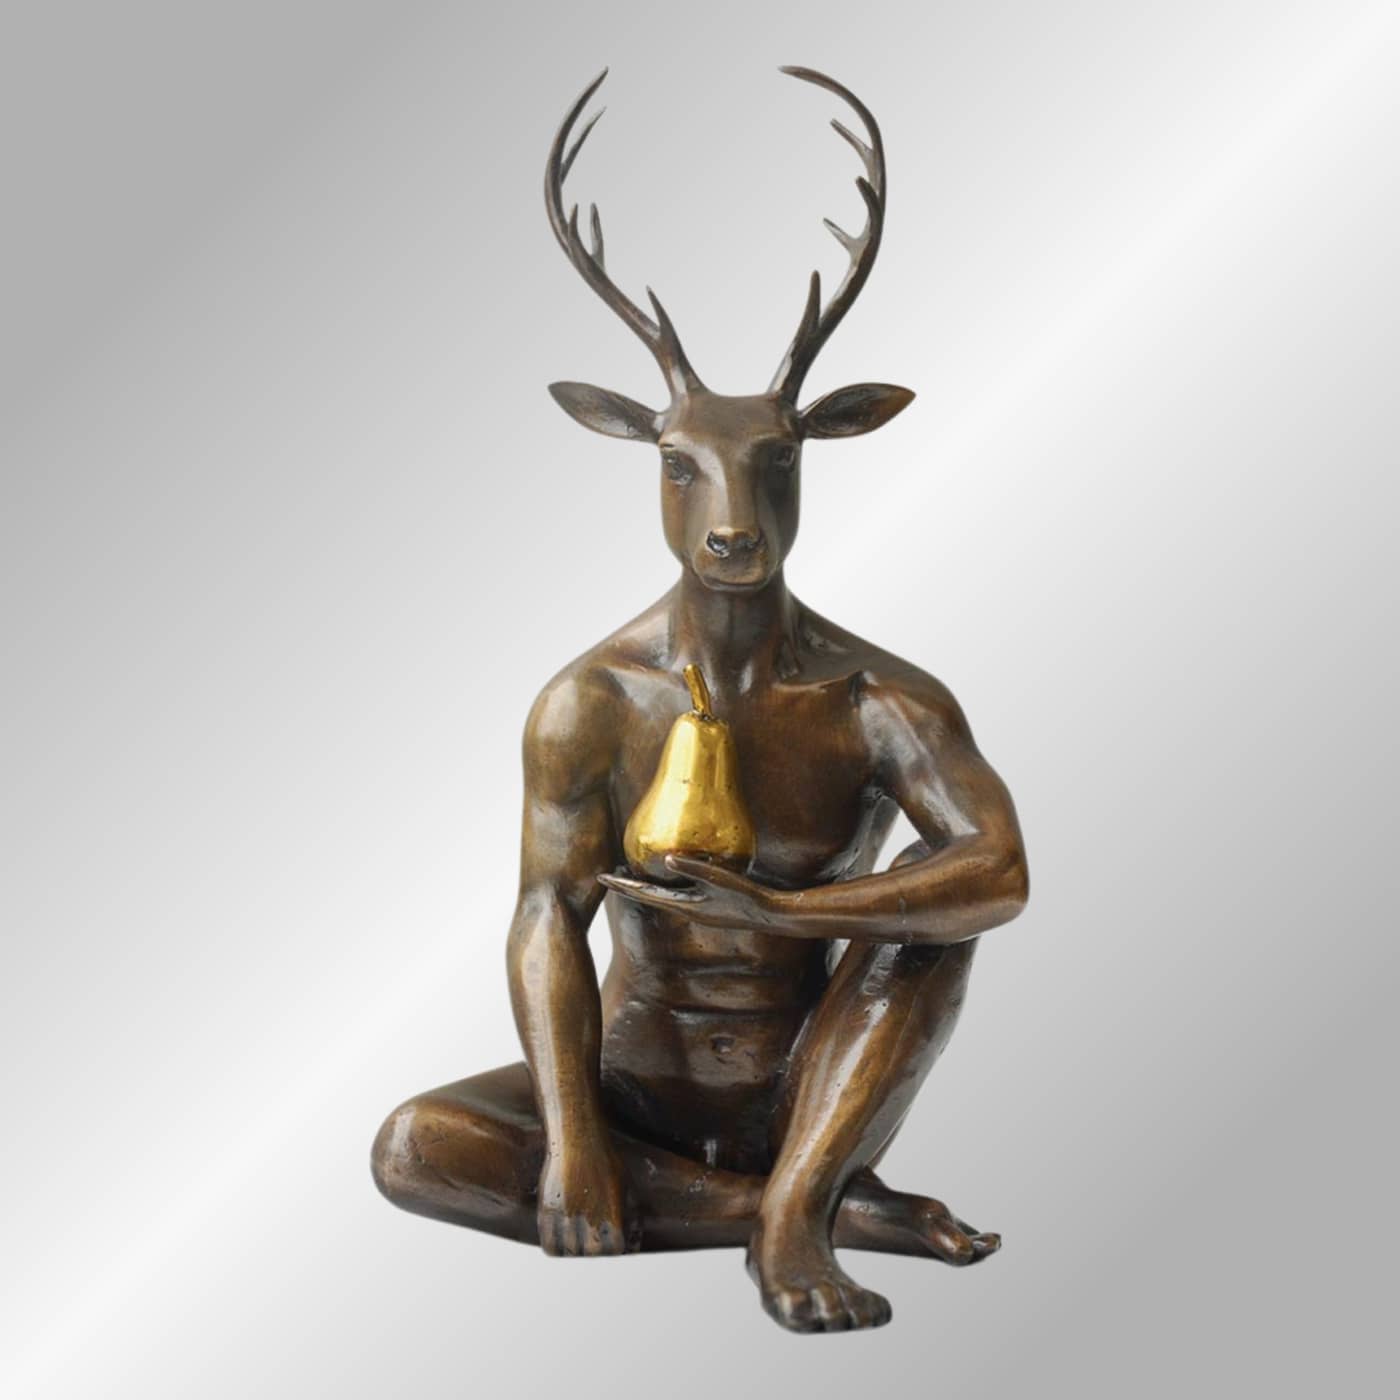 Gillie and Marc Bronze Sculpture ~ 'Deerman Grew a Pear' (Gold) - Curate Art & Design Gallery Sorrento Mornington Peninsula Melbourne